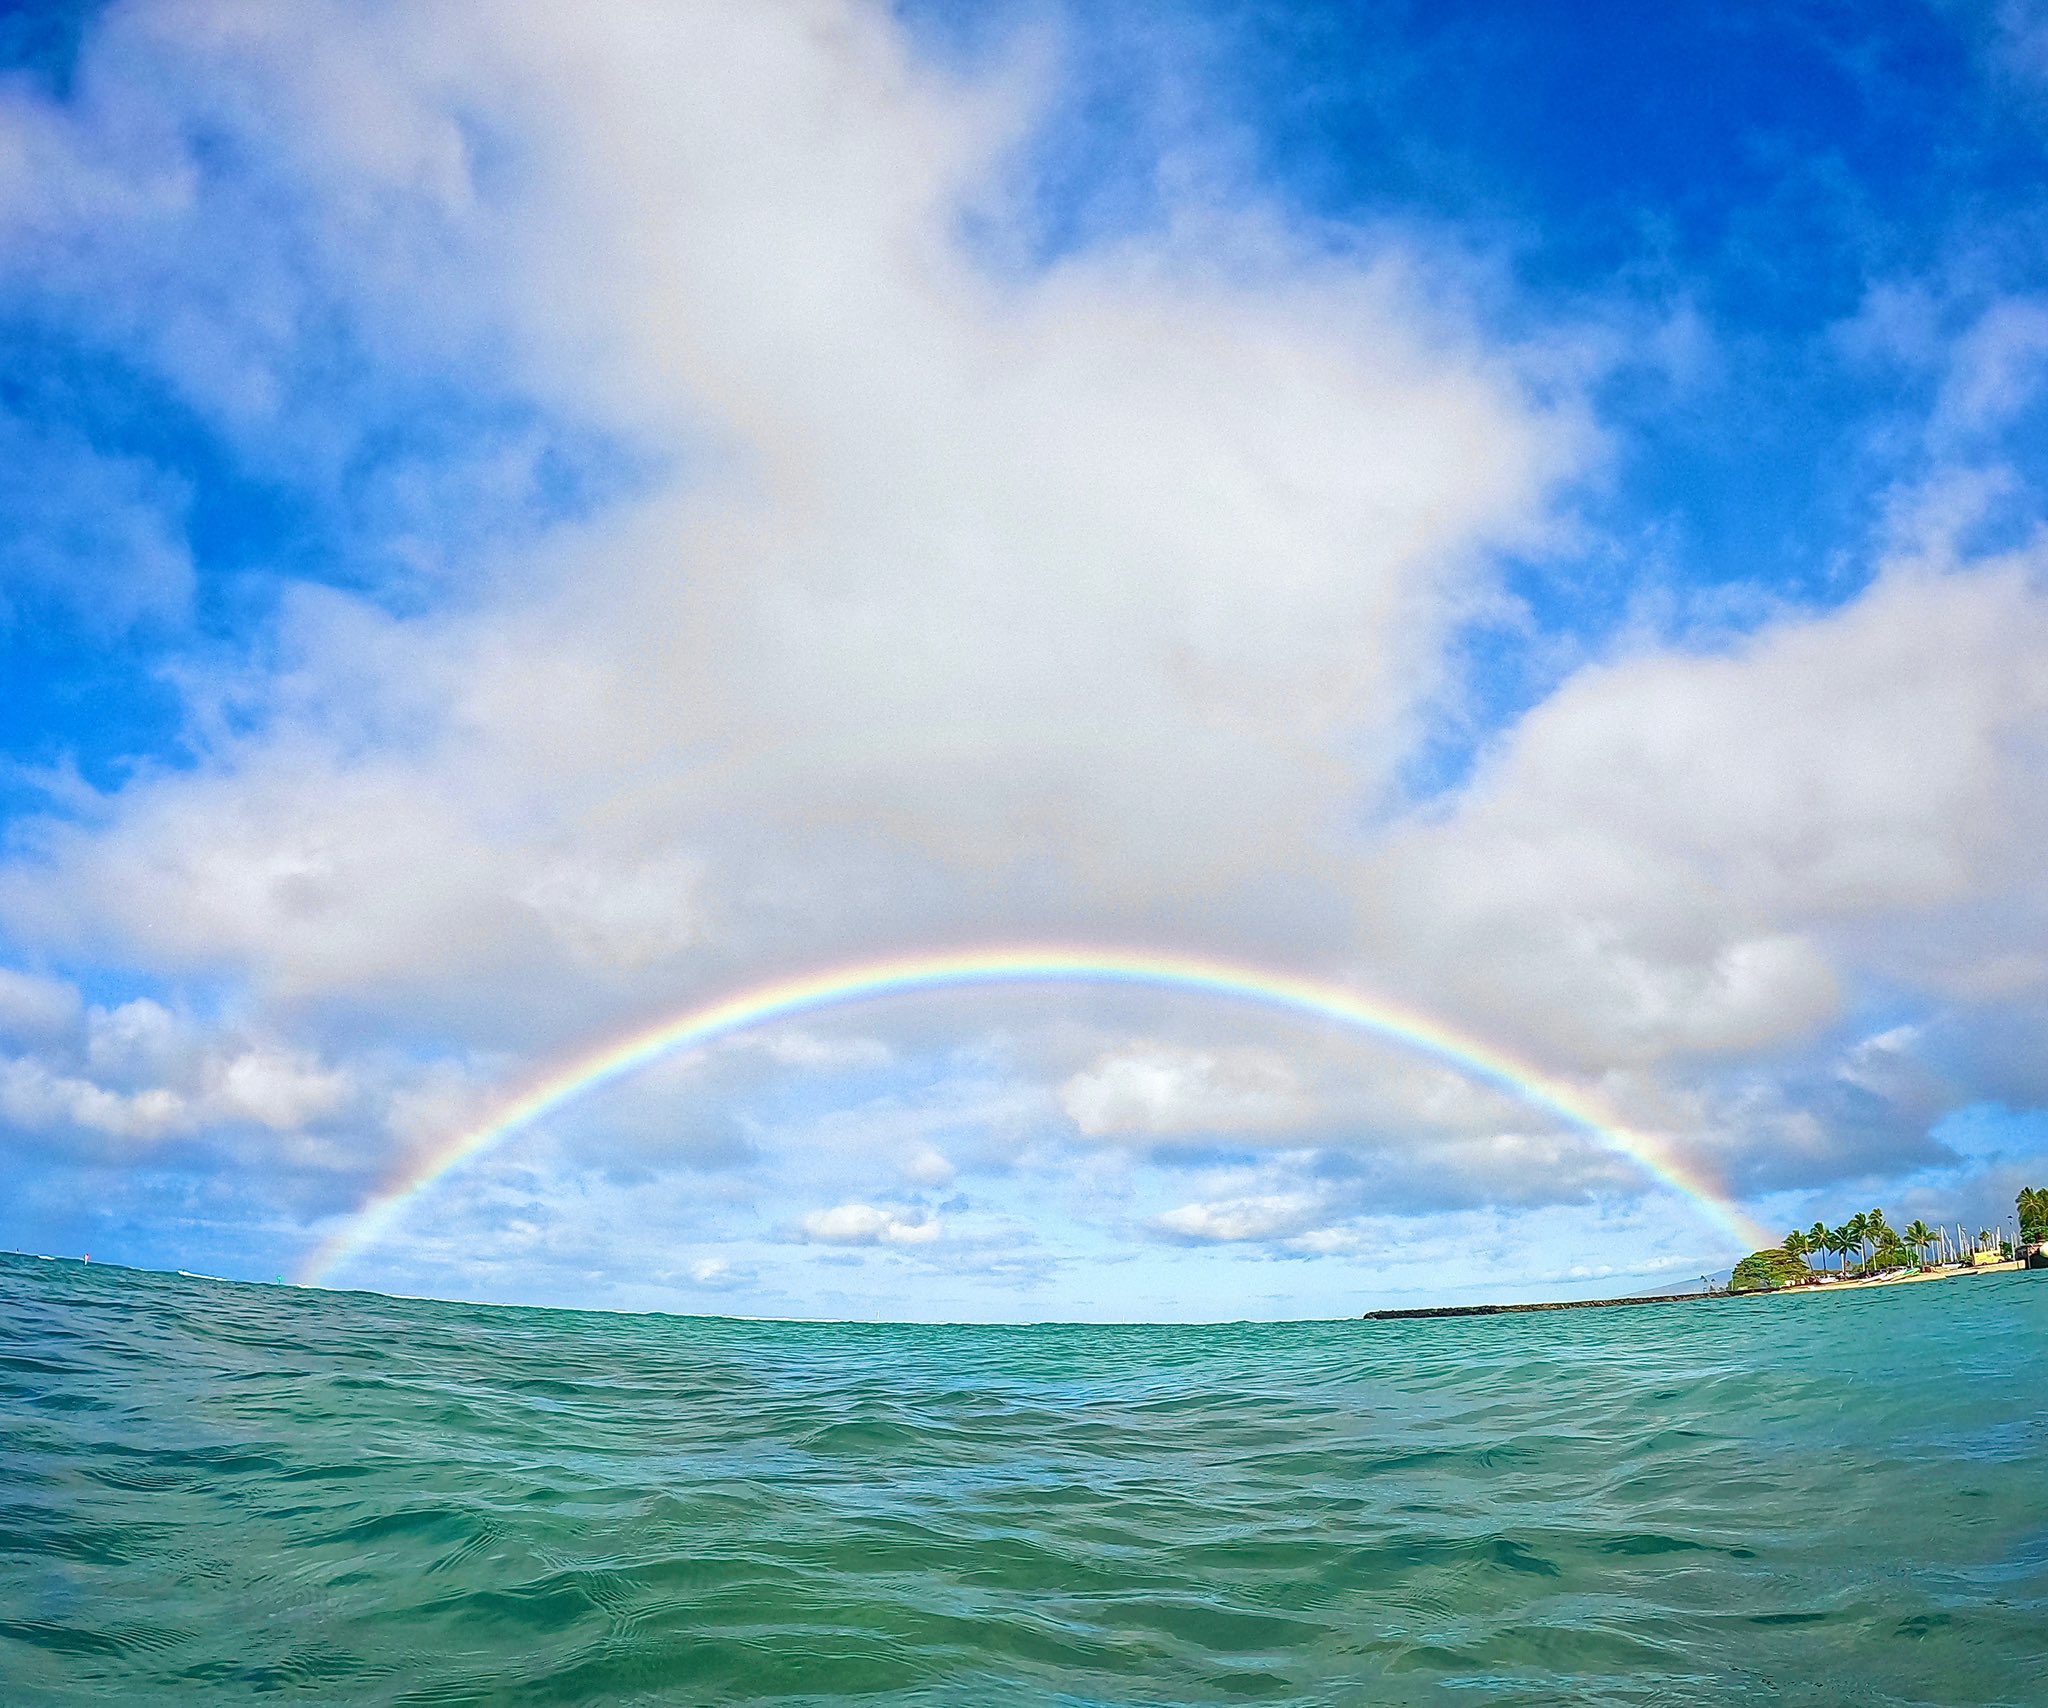 Milimili Hawaii Have A Wonderful Day Today S Double Rainbow T Co Nduwkfbhvh Hawaii Waikikibeach Rainbow ダブルレインボー ハワイ ワイキキ ビーチ Beachlife T Co Hu9romh1kn Twitter